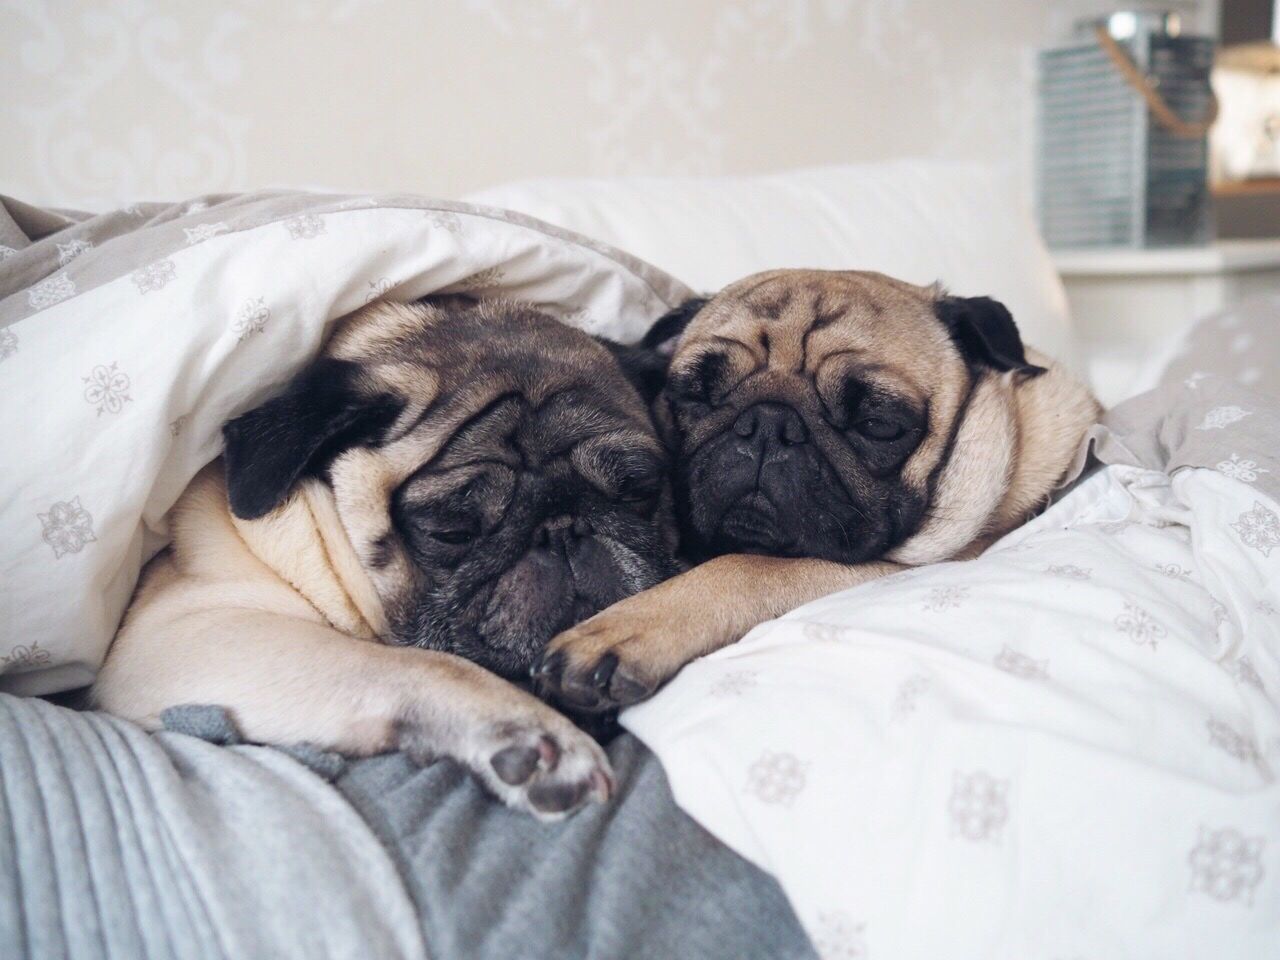 Two pugs sleeping together